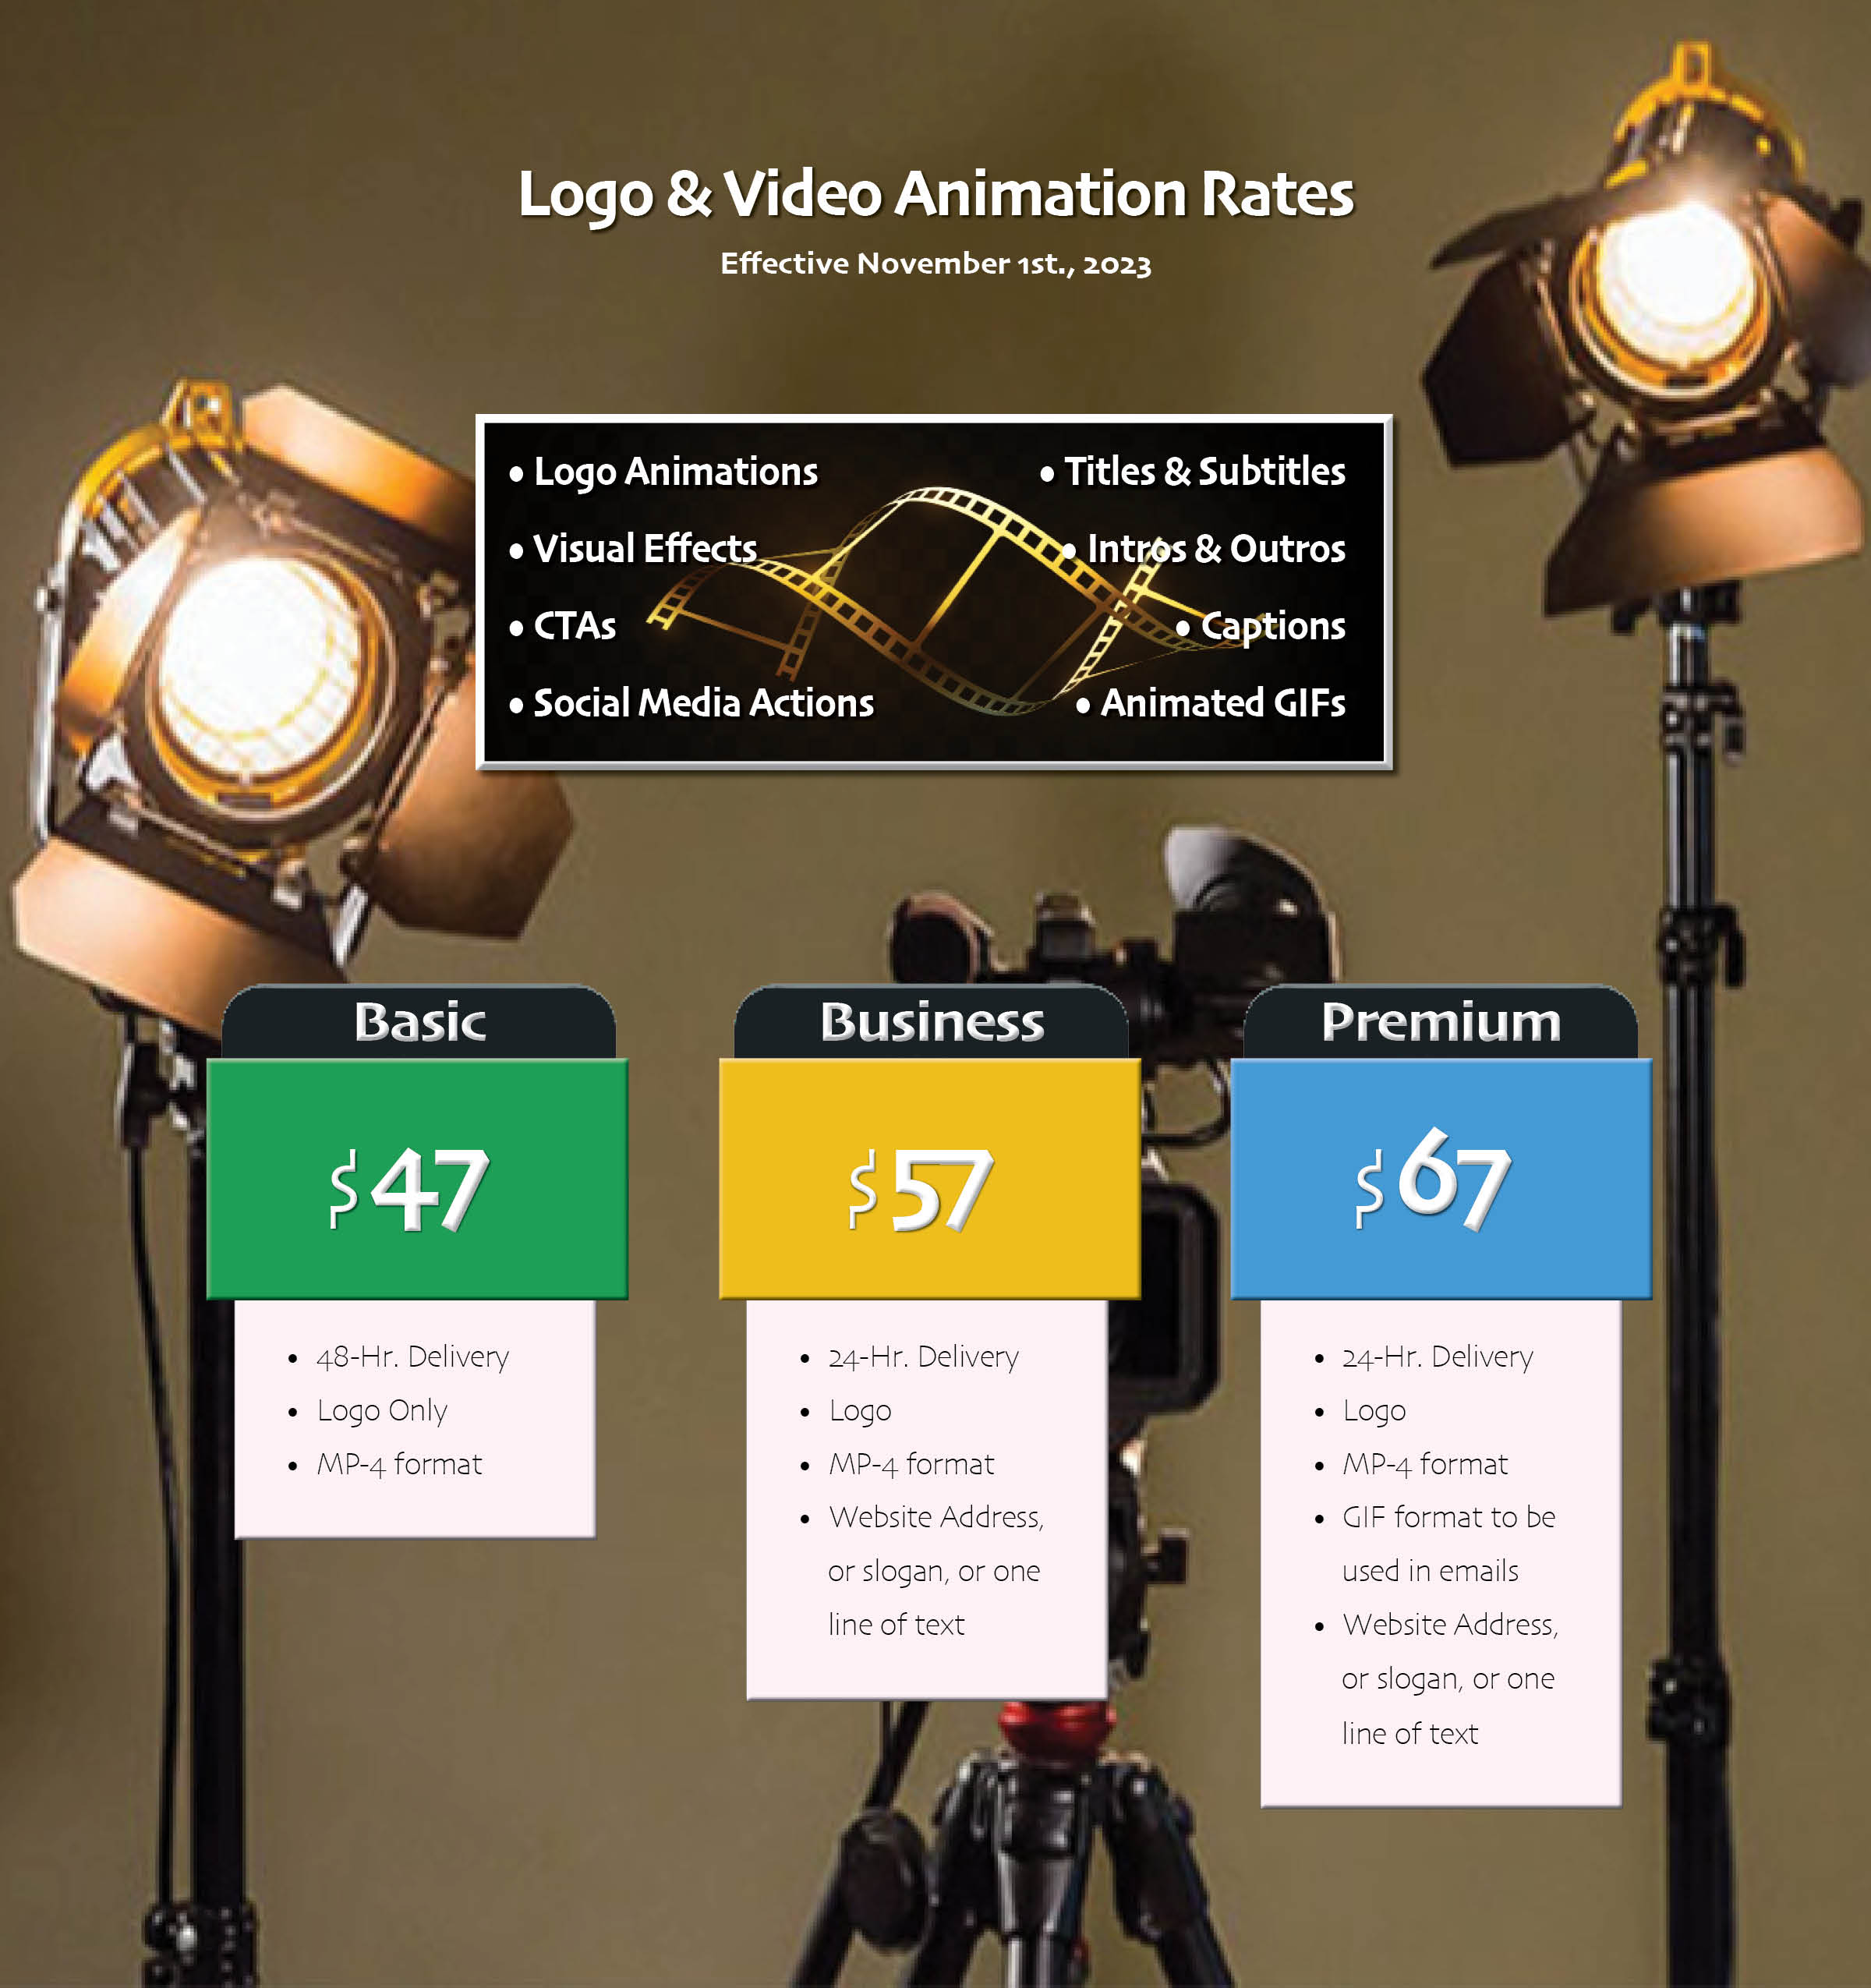 video-animation-rates-effective-nov-1st-2023